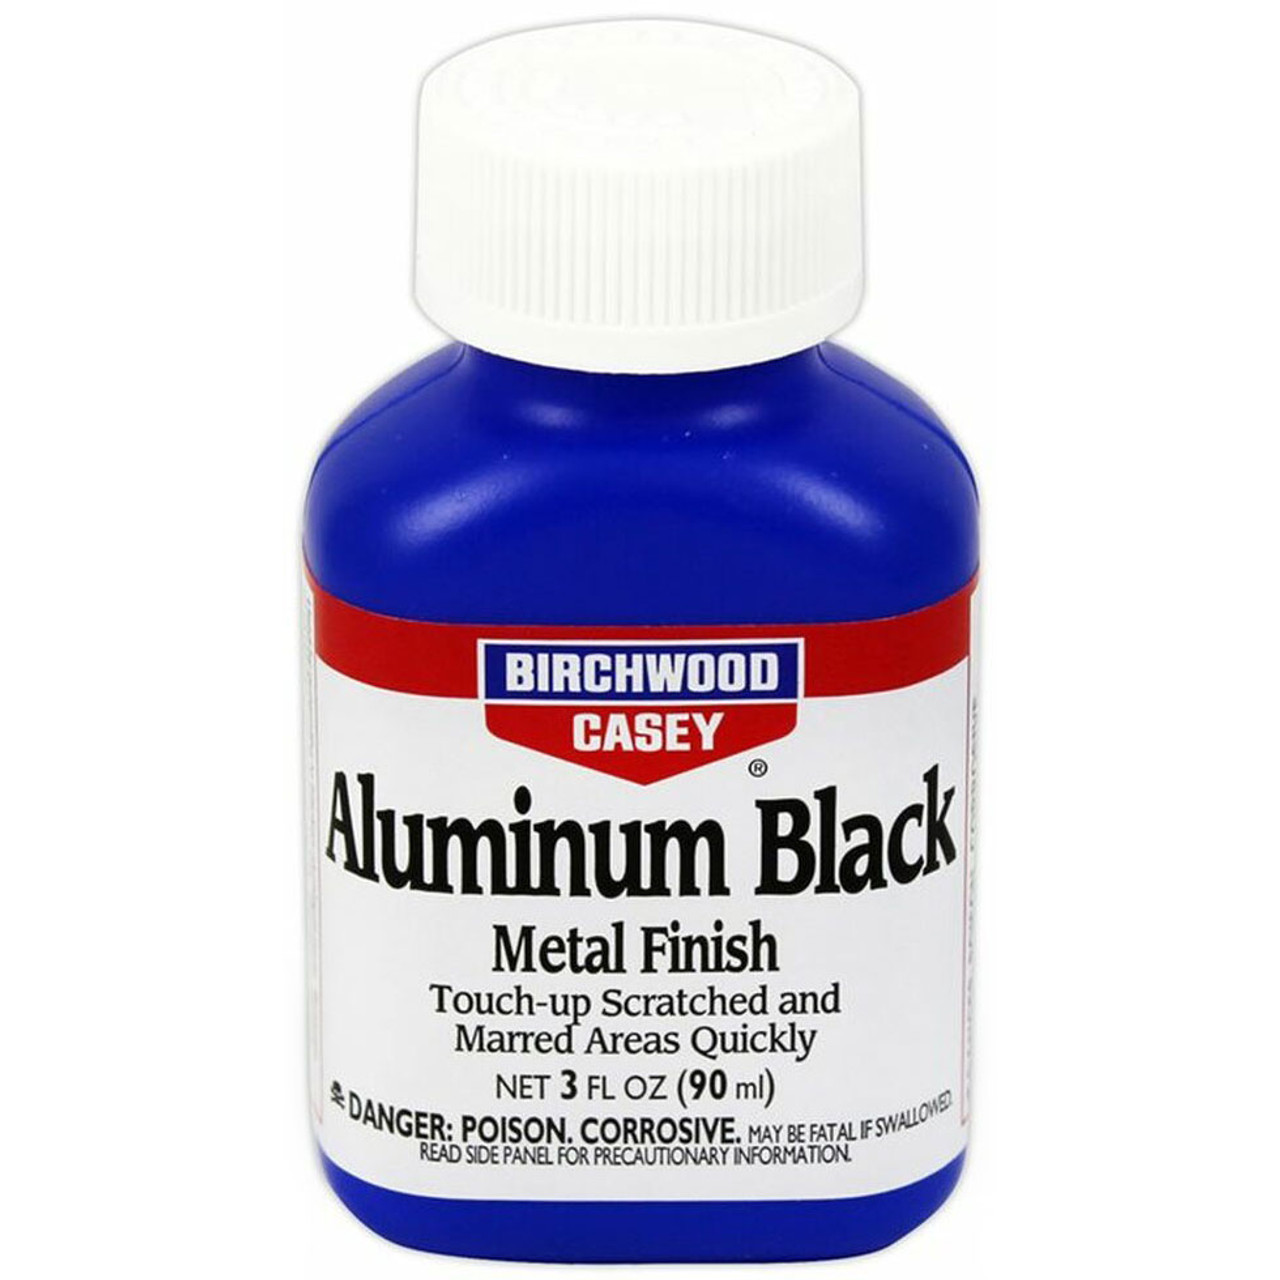 Birchwood Casey Aluminum Black Metal Finish